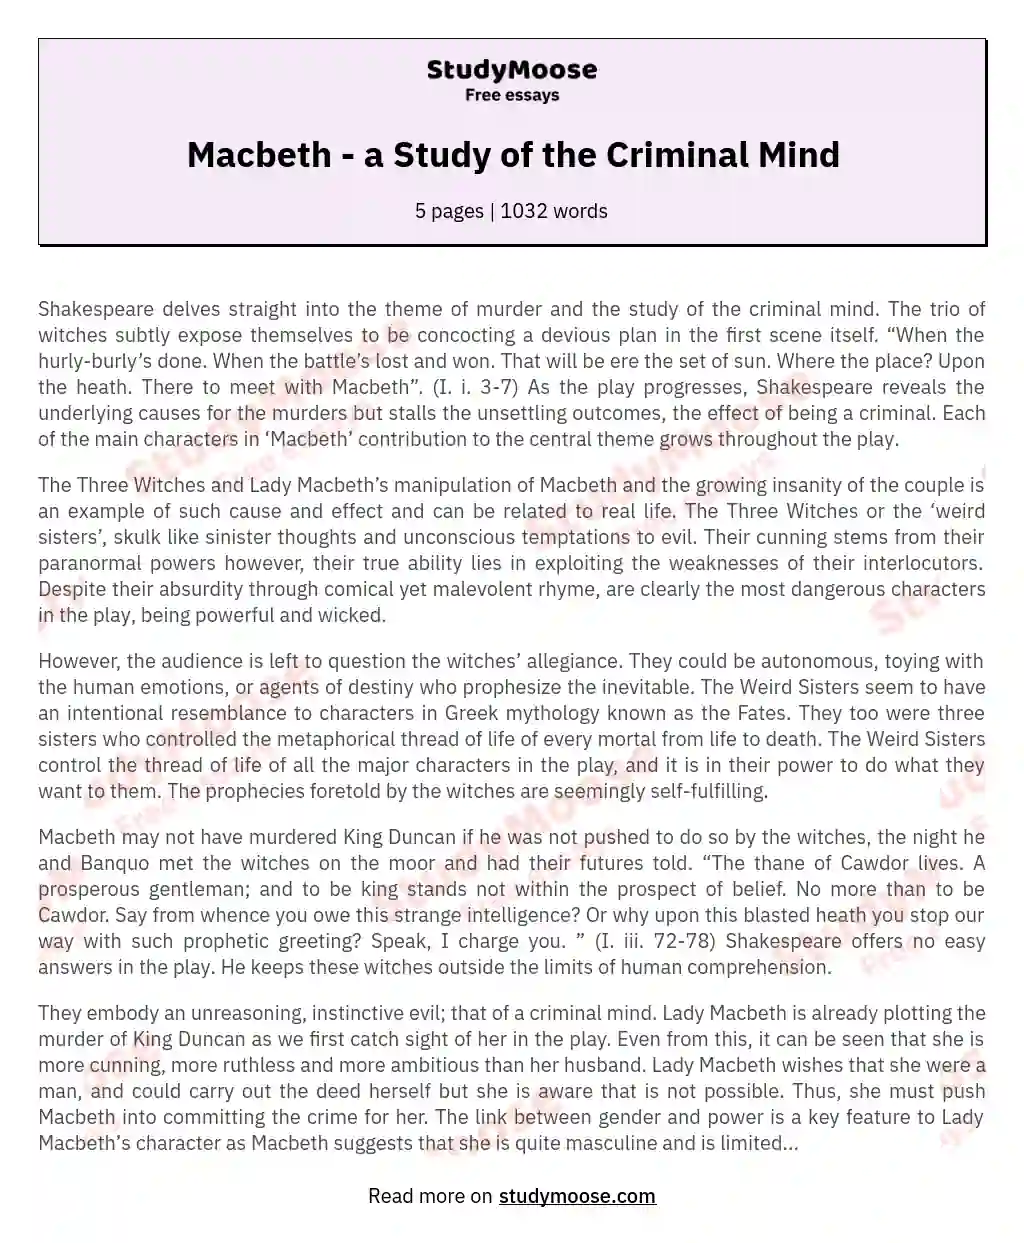 Macbeth - a Study of the Criminal Mind essay